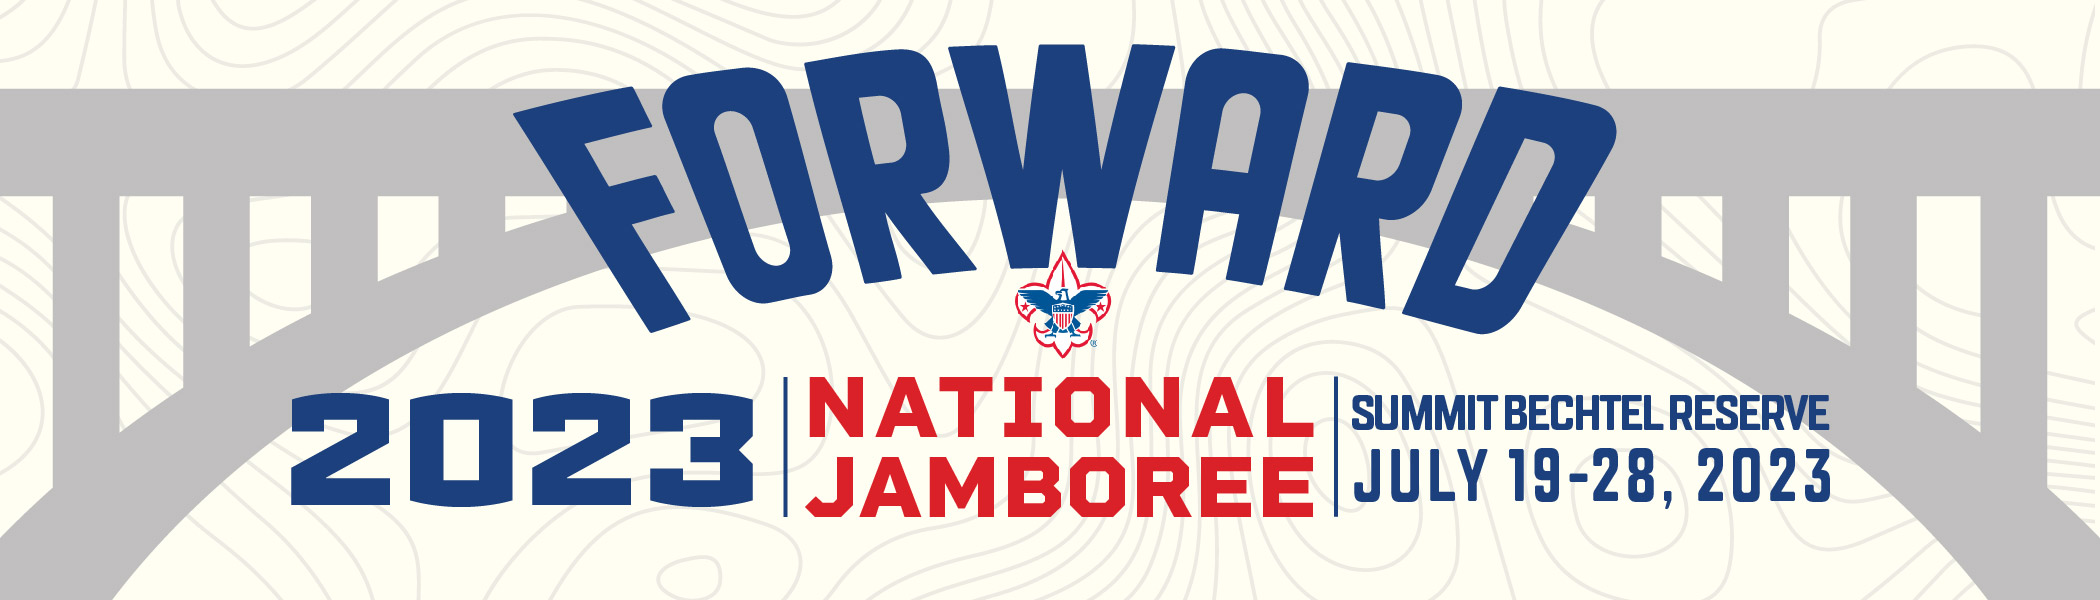 2023 National Jamboree Greater Tampa Bay Area Council